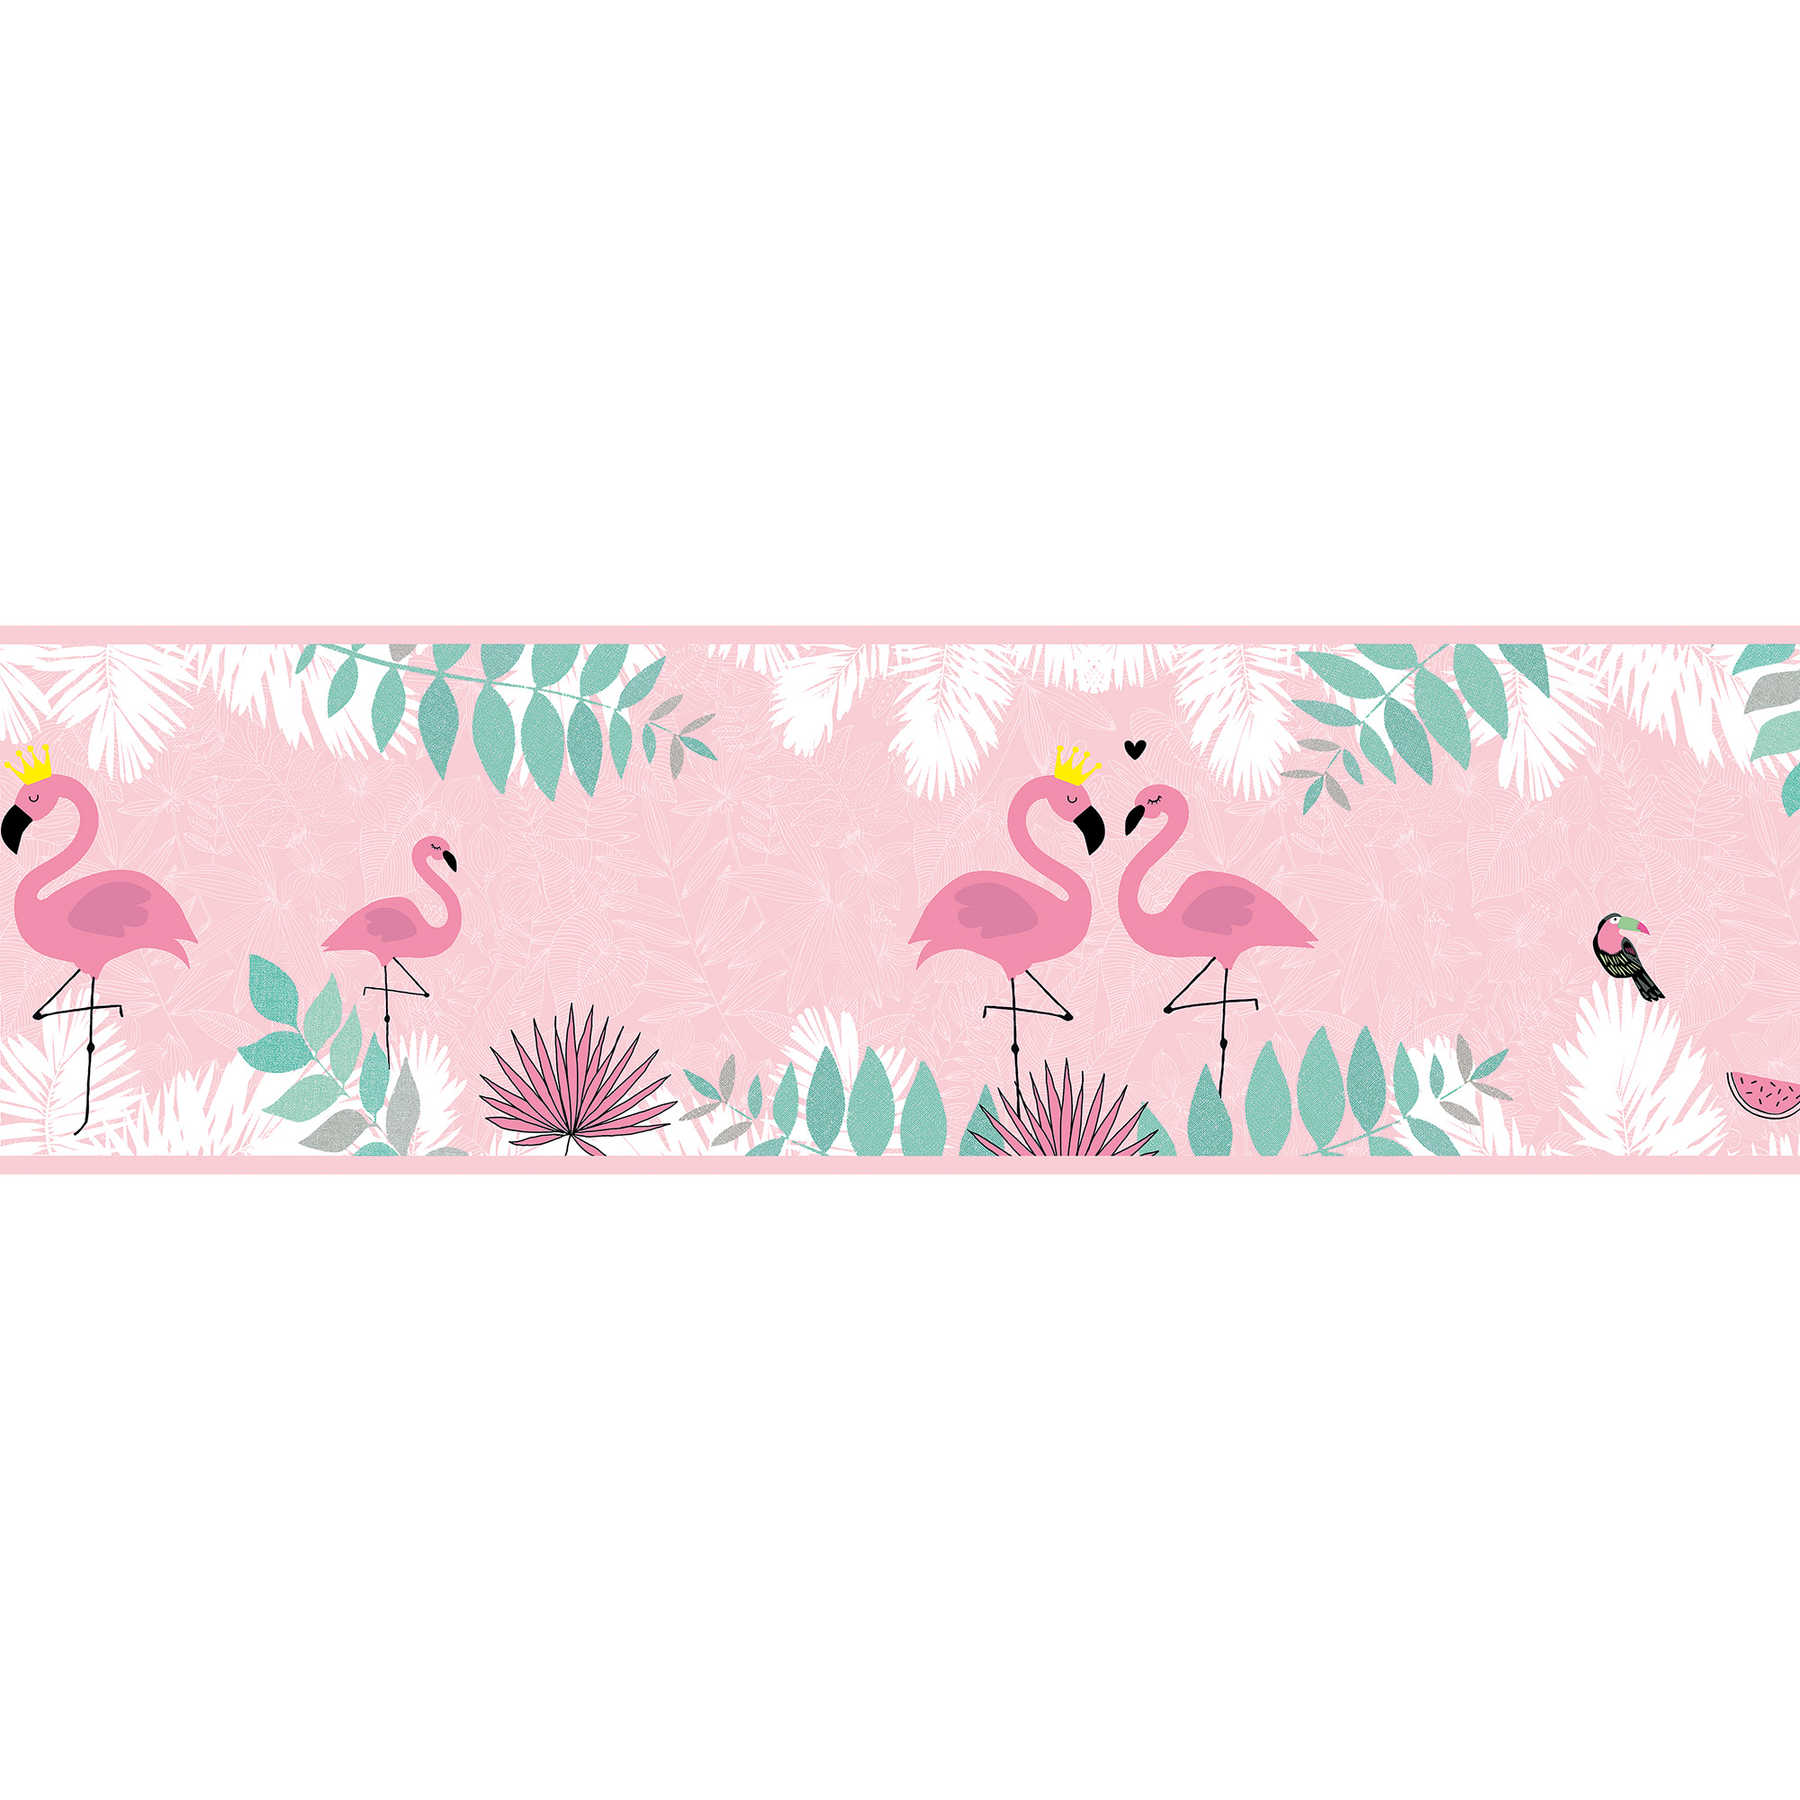         Paradiesische Flamingo Bordüre "Pink Flamingo Love" – Rosa, Grün, Weiß
    